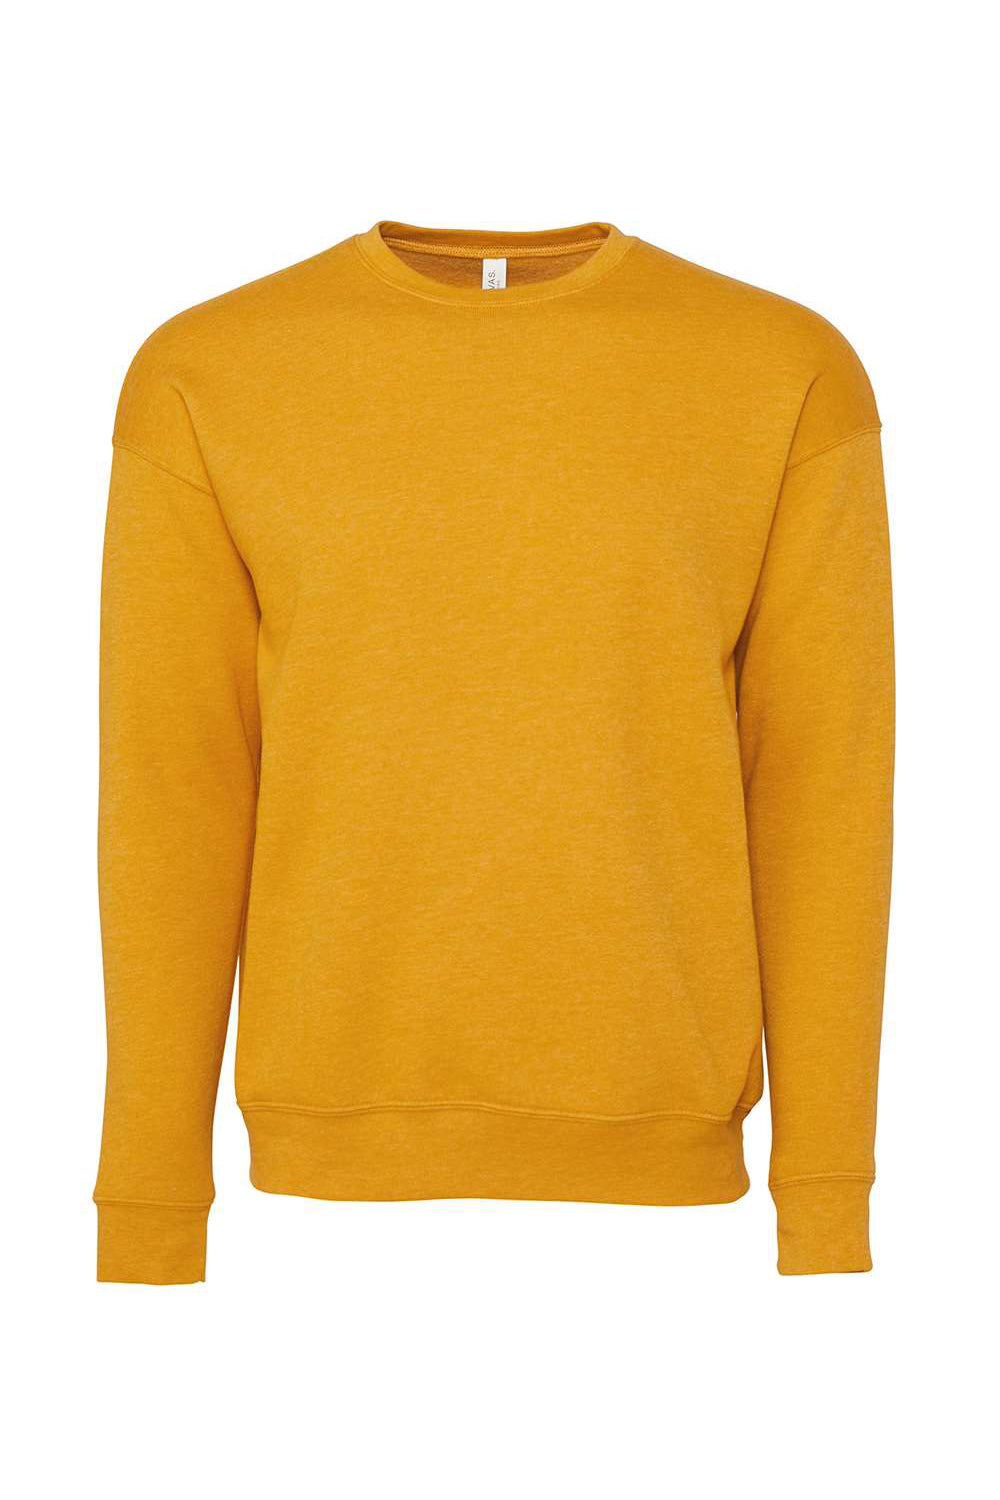 Bella + Canvas BC3945/3945 Mens Fleece Crewneck Sweatshirt Heather Mustard Yellow Flat Front